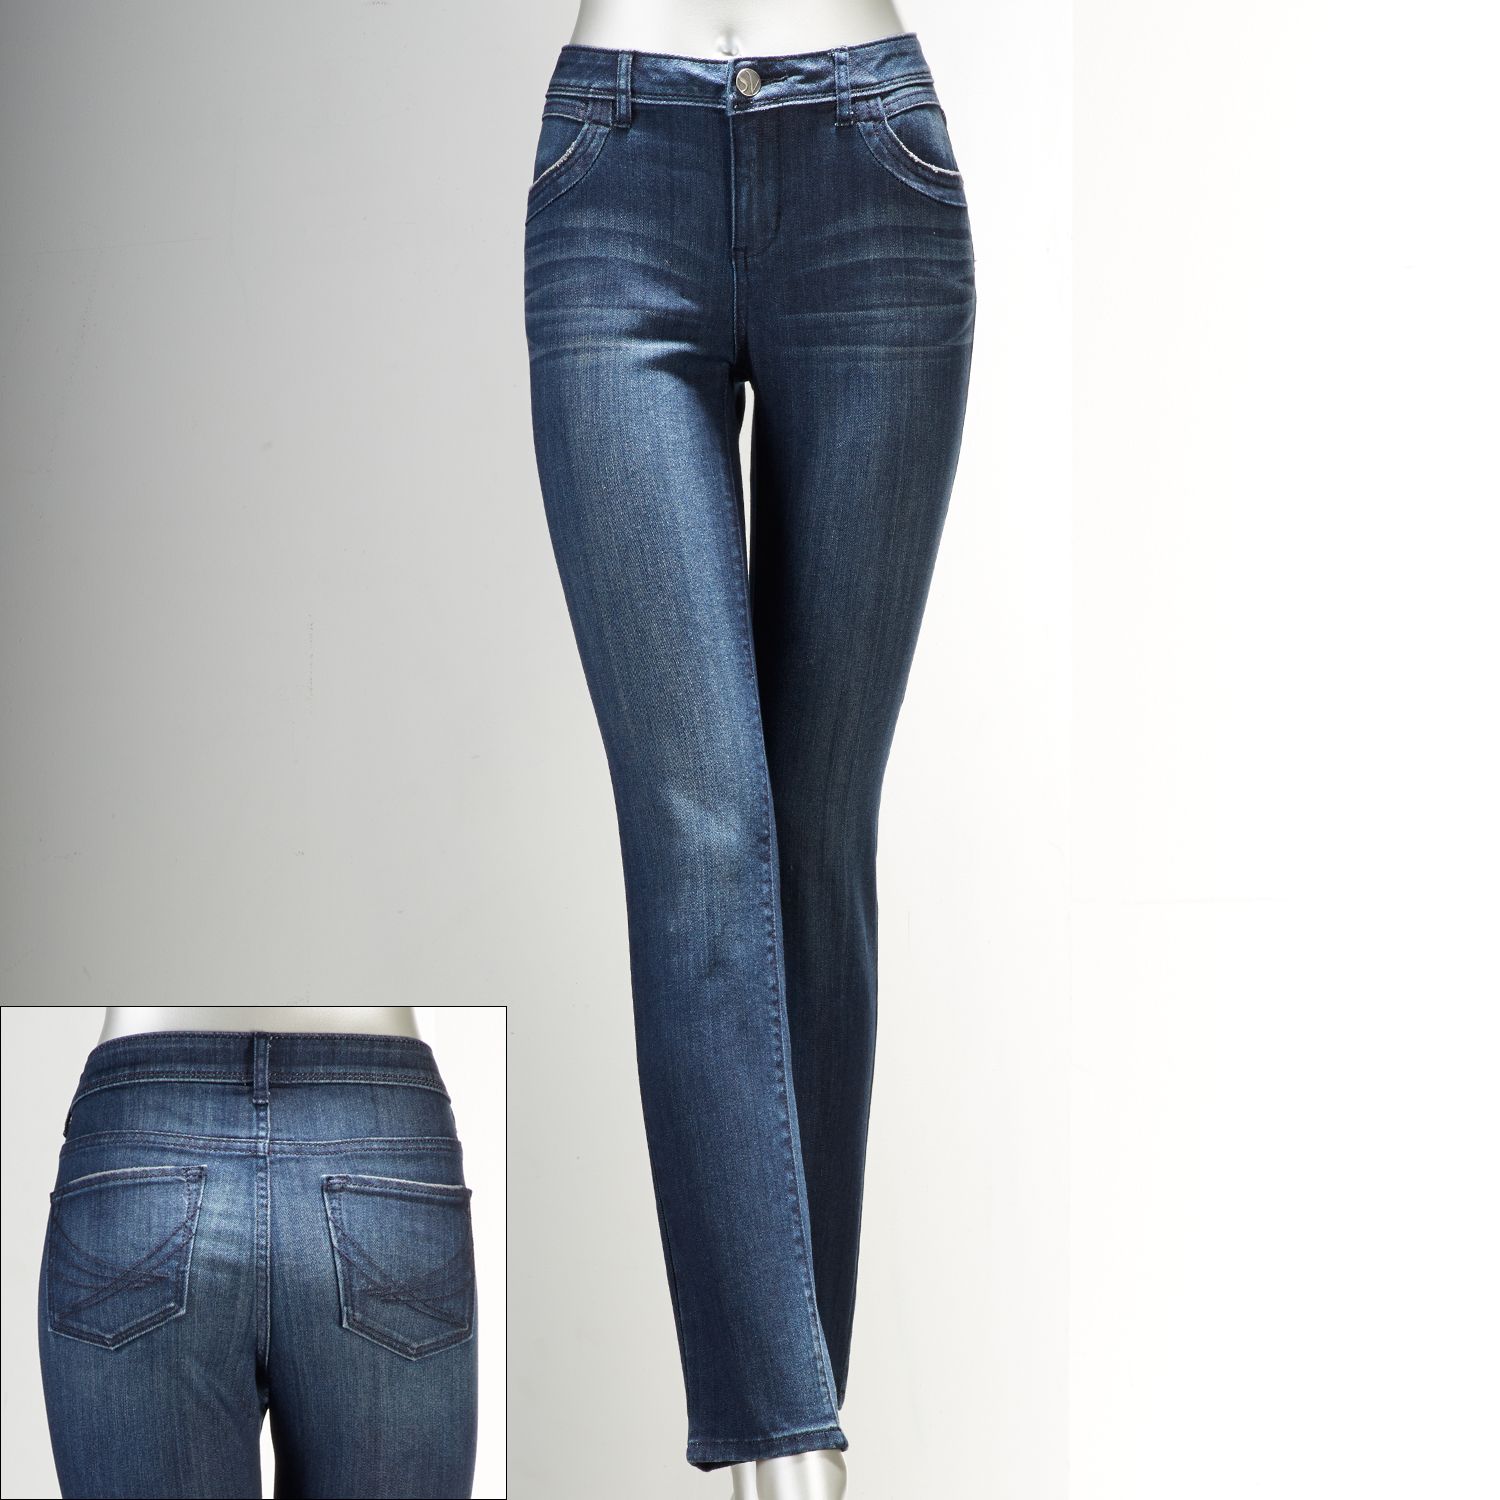 Simply Vera Vera Wang Skinny Jeans 